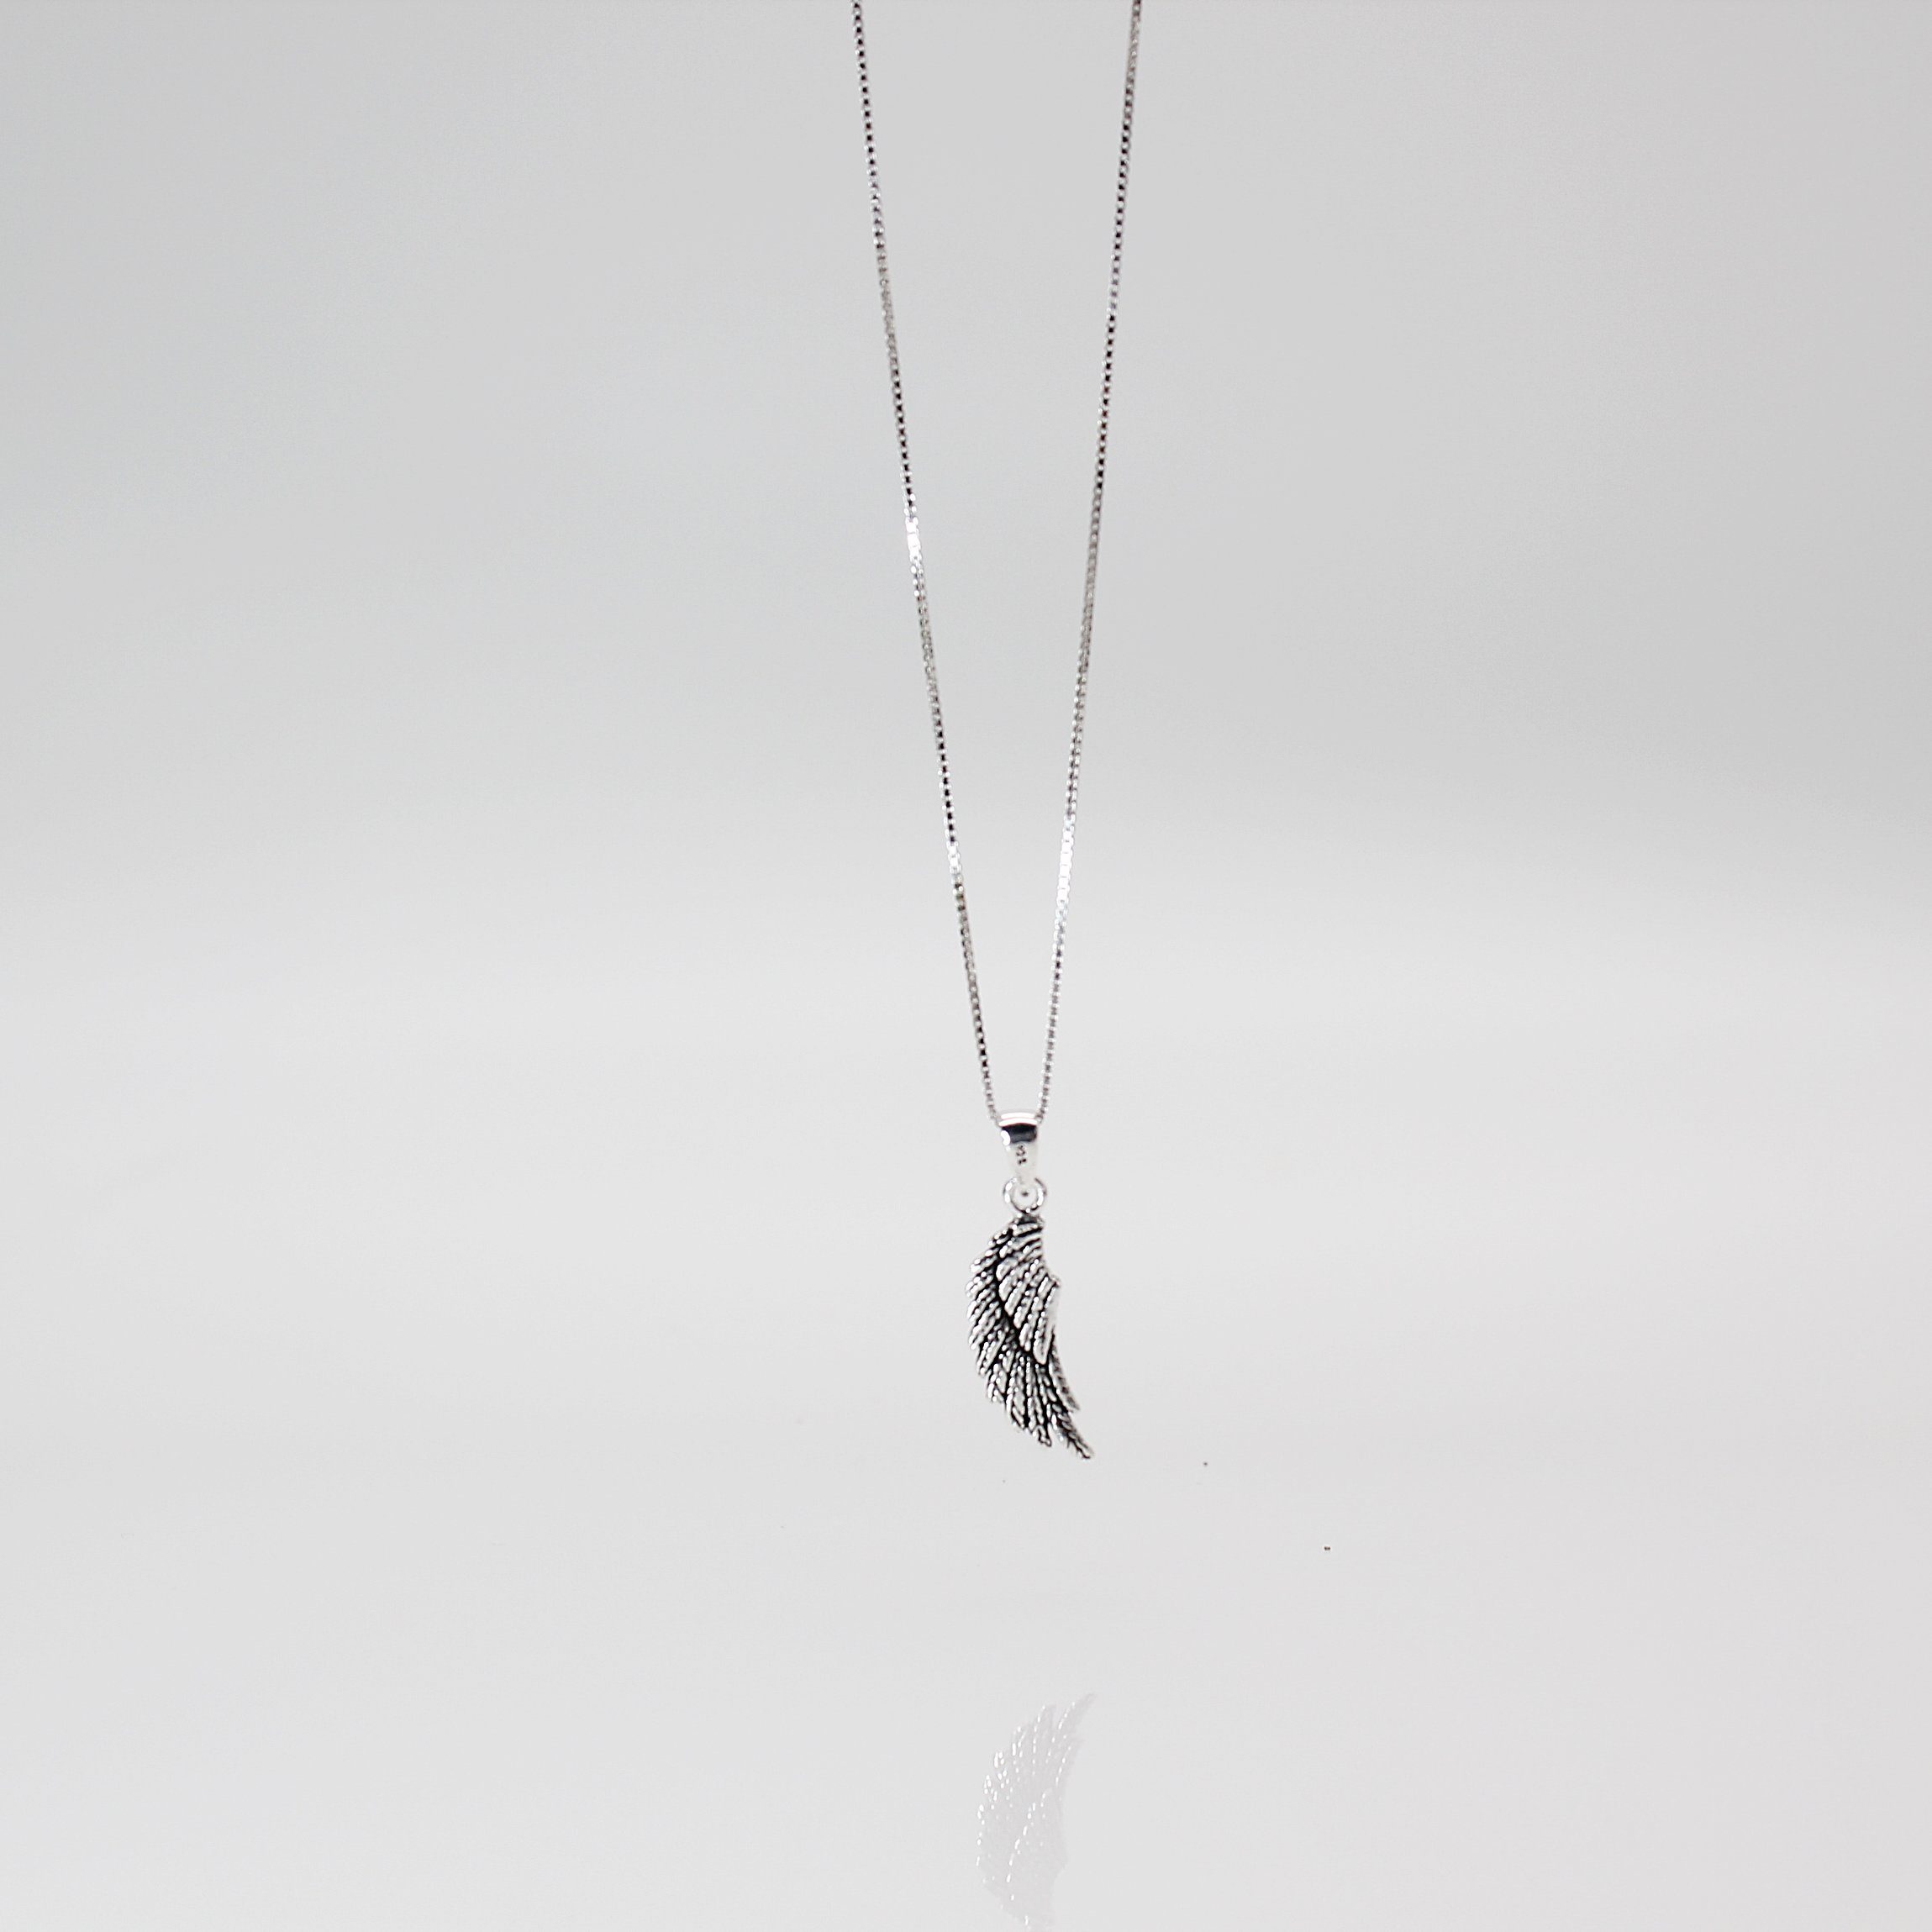 ELLAWIL Silberkette Kette mit Engelsflügel Anhänger Anhänger Engel Flügel Silberkette (Kettenlänge 45 cm, Sterling Silber 925), inklusive Geschenkschachtel | Silberketten